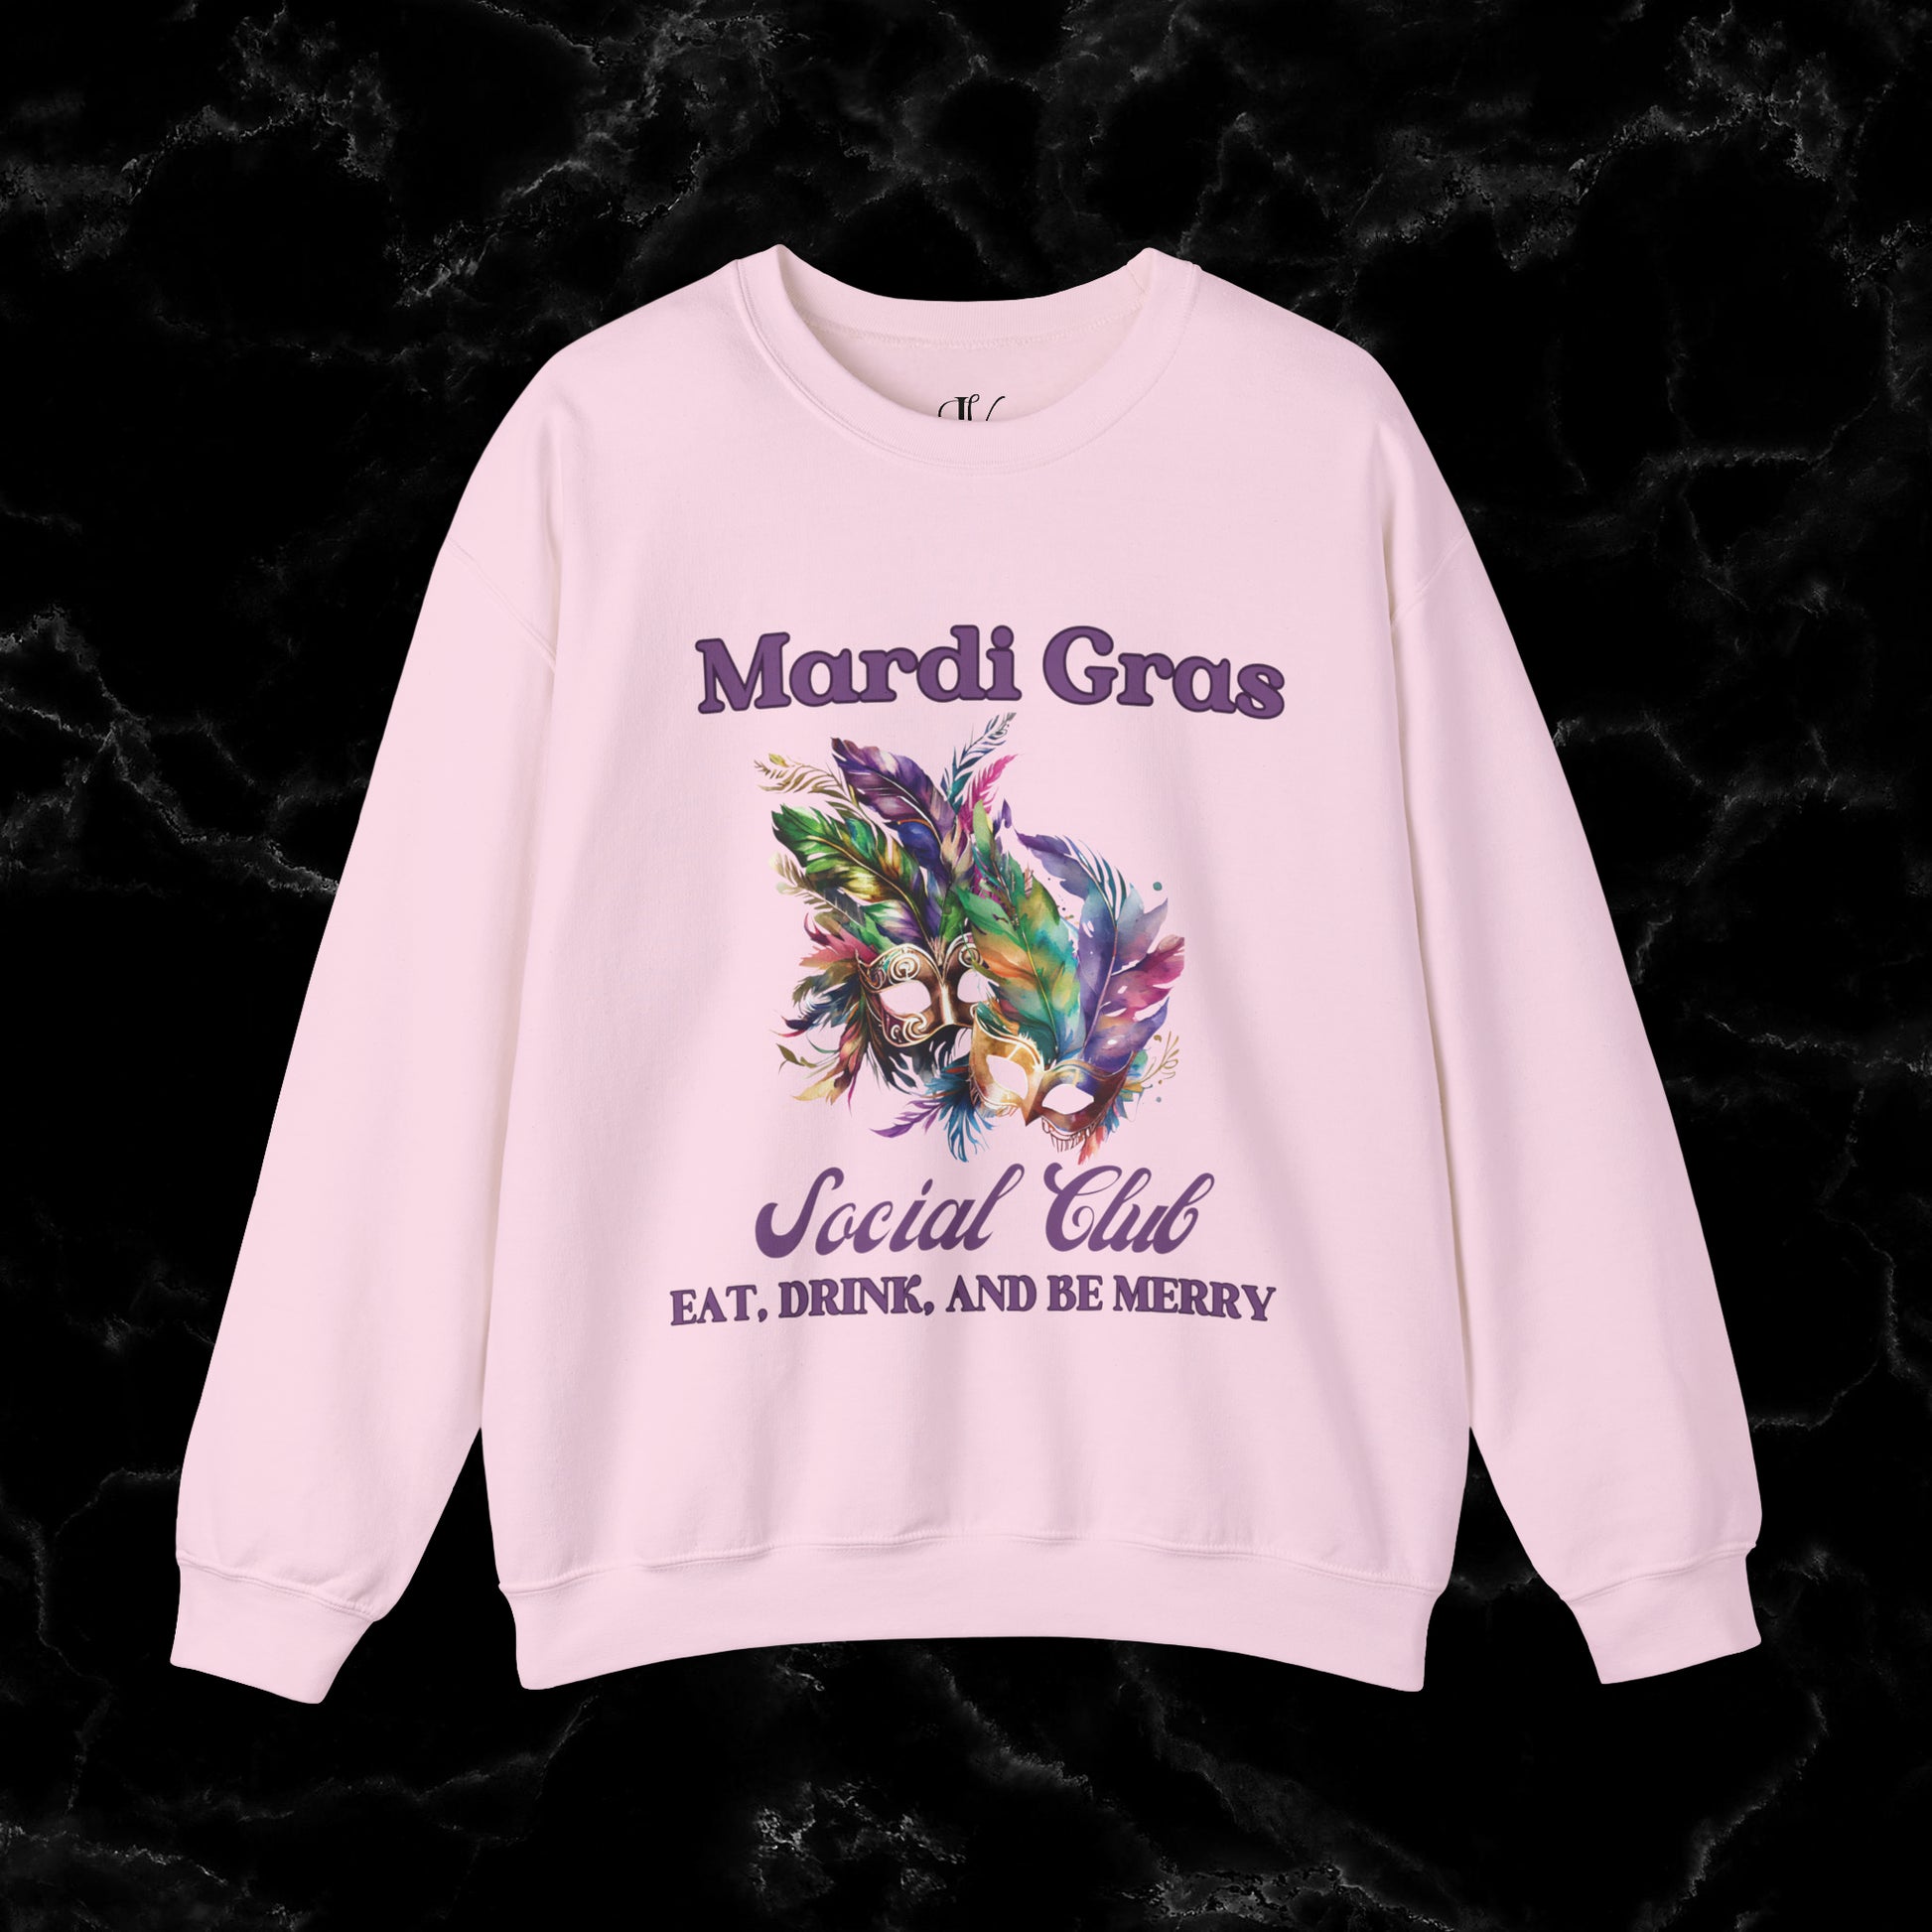 Mardi Gras Sweatshirt Women - NOLA Luxury Bachelorette Sweater, Unique Fat Tuesday Shirt, Louisiana Girls Trip Sweater, Mardi Gras Social Club Chic Sweatshirt S Light Pink 